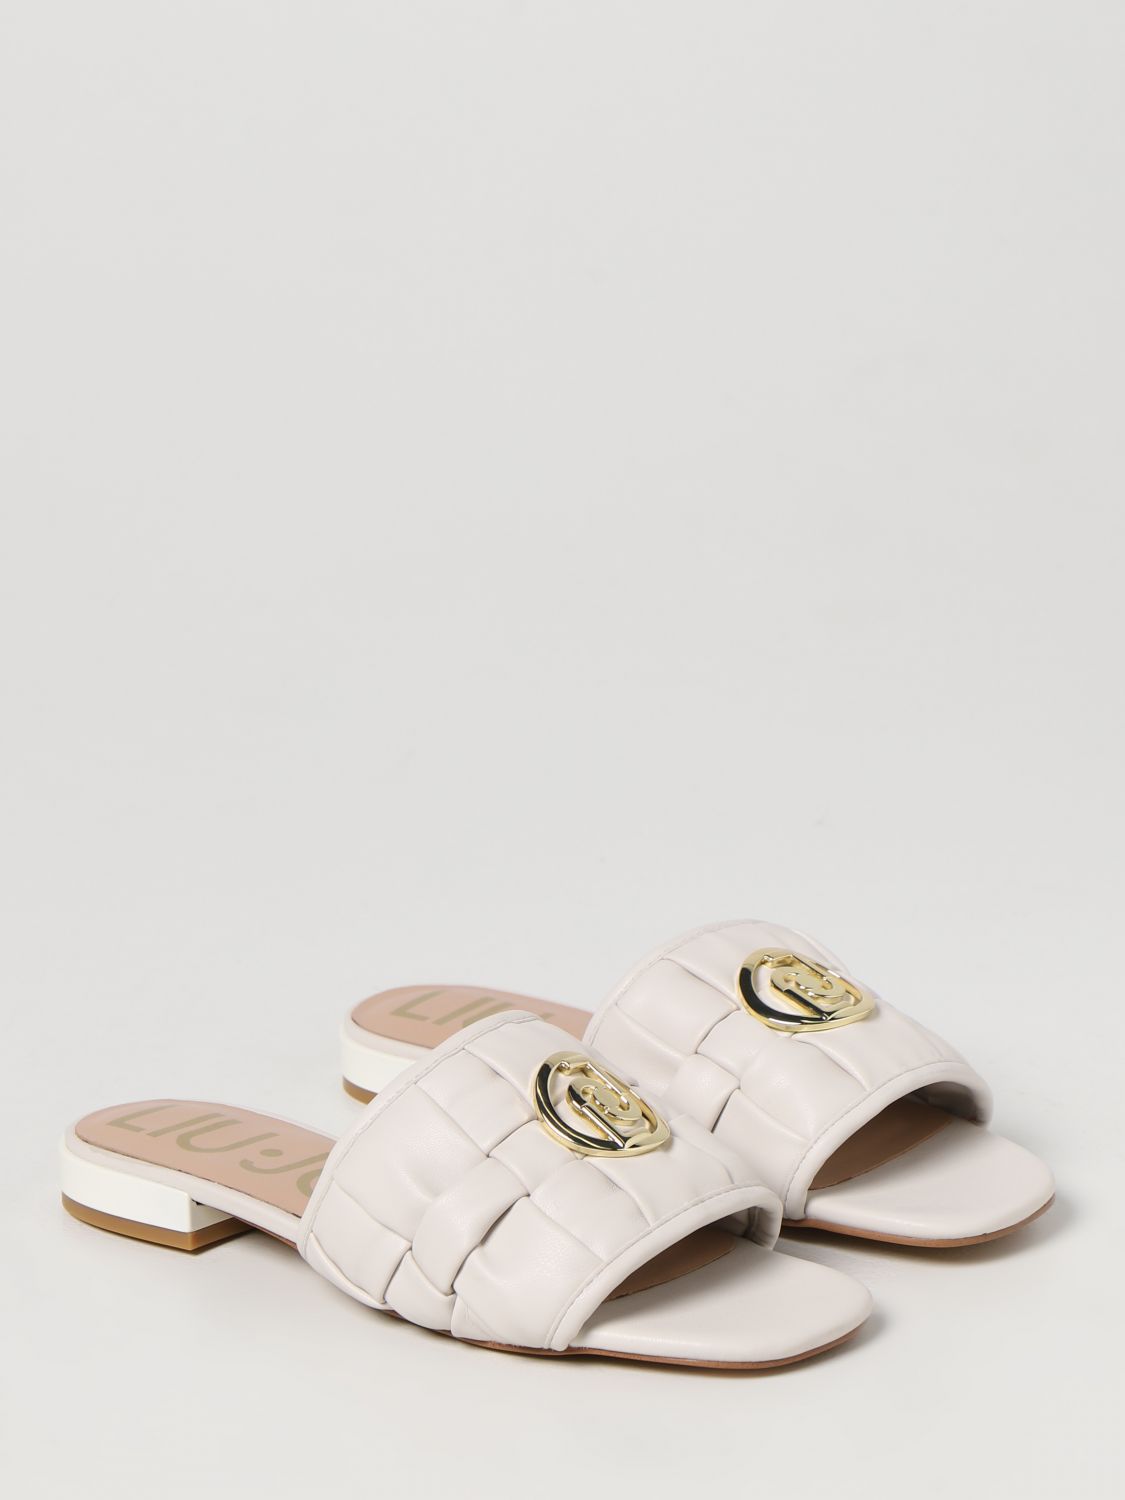 Sandales Liu Jo en coloris Blanc Femme Chaussures Chaussures plates Sandales plates 